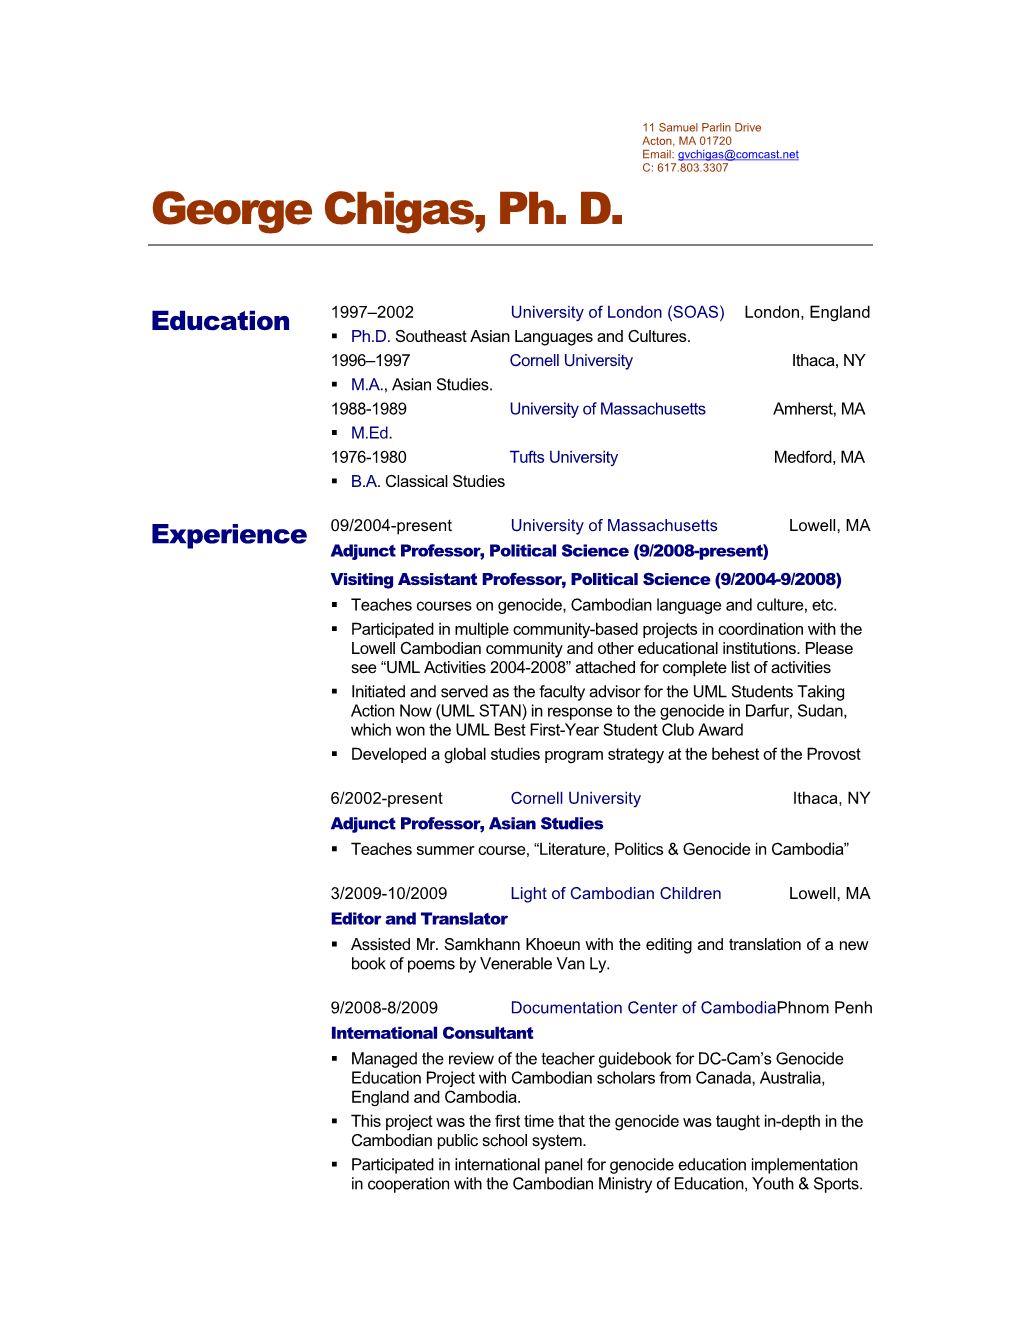 George Chigas, Ph. D